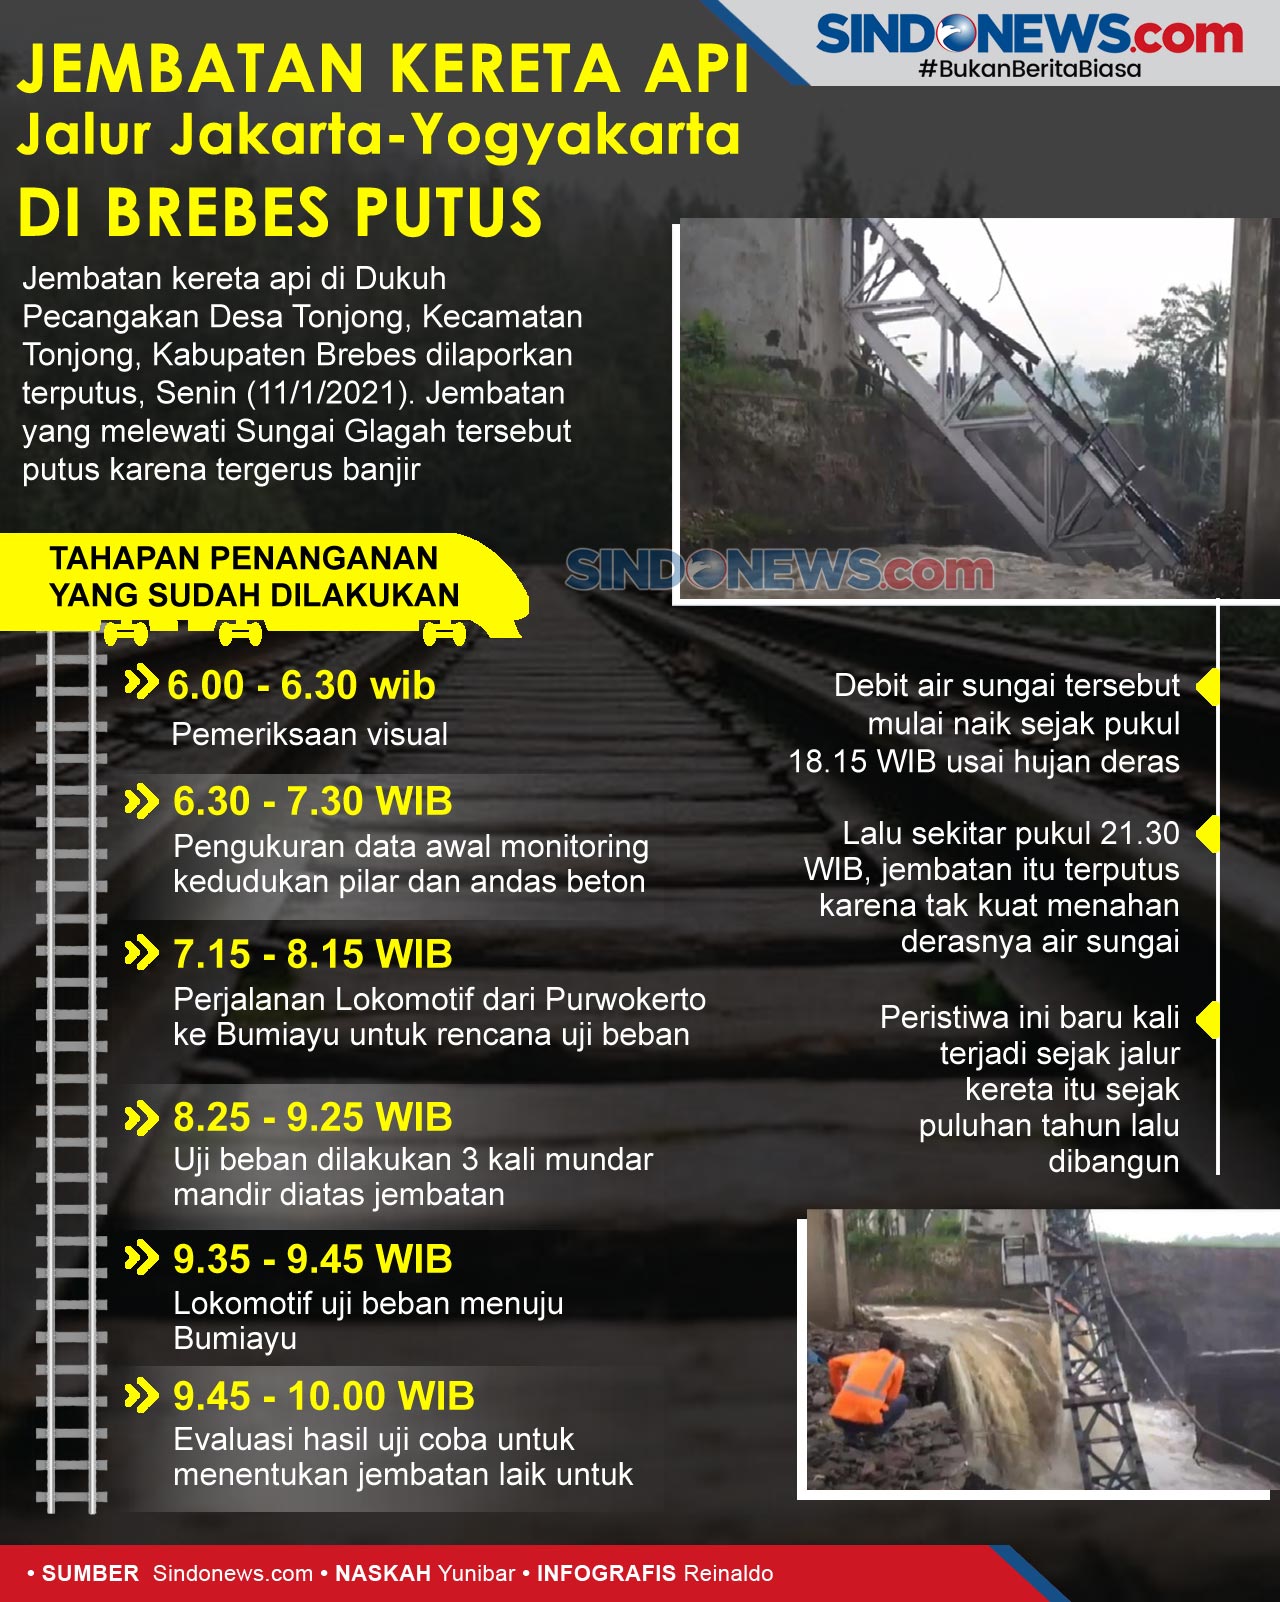 SINDOgrafis: Jembatan Kereta Api Jalur Jakarta-Yogyakarta di Brebes Putus